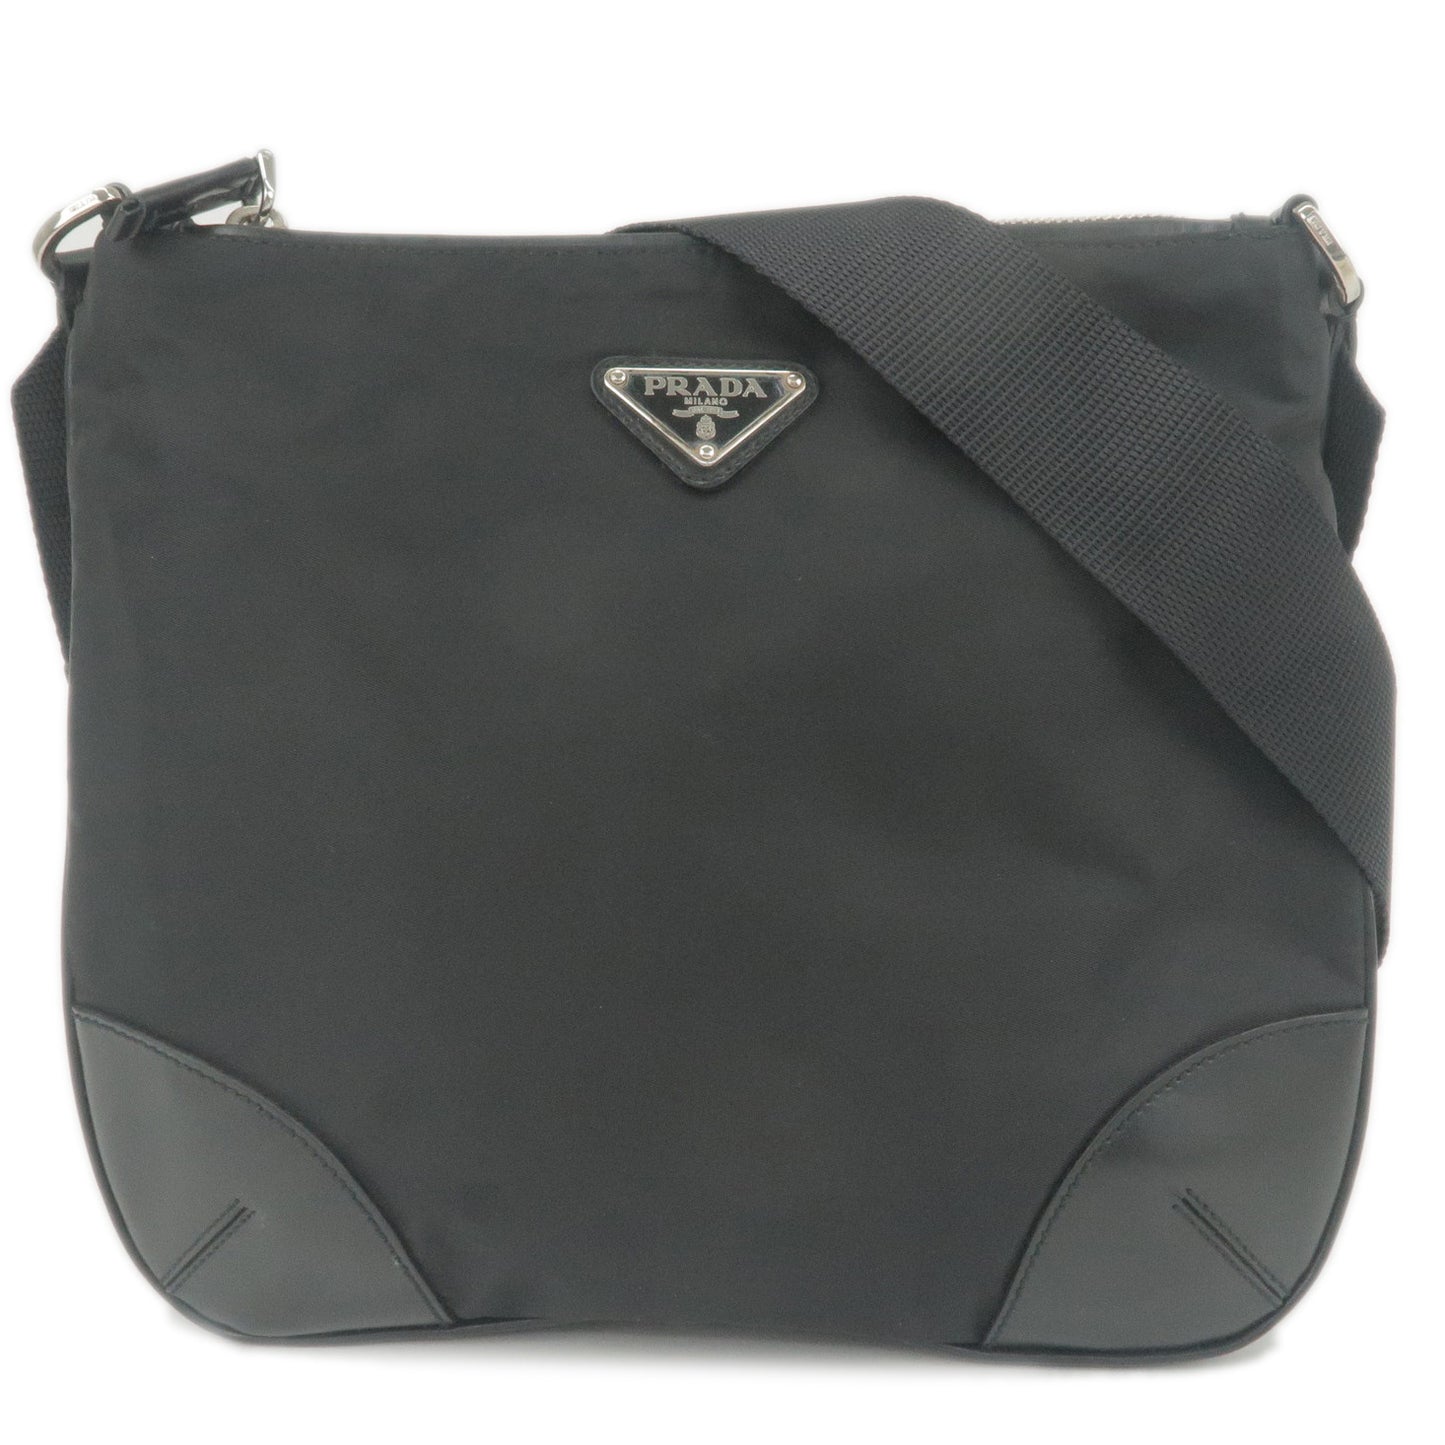 PRADA-Logo-Nylon-Leather-Shoulder-Bag-Purse-NERO-Black-BT0332